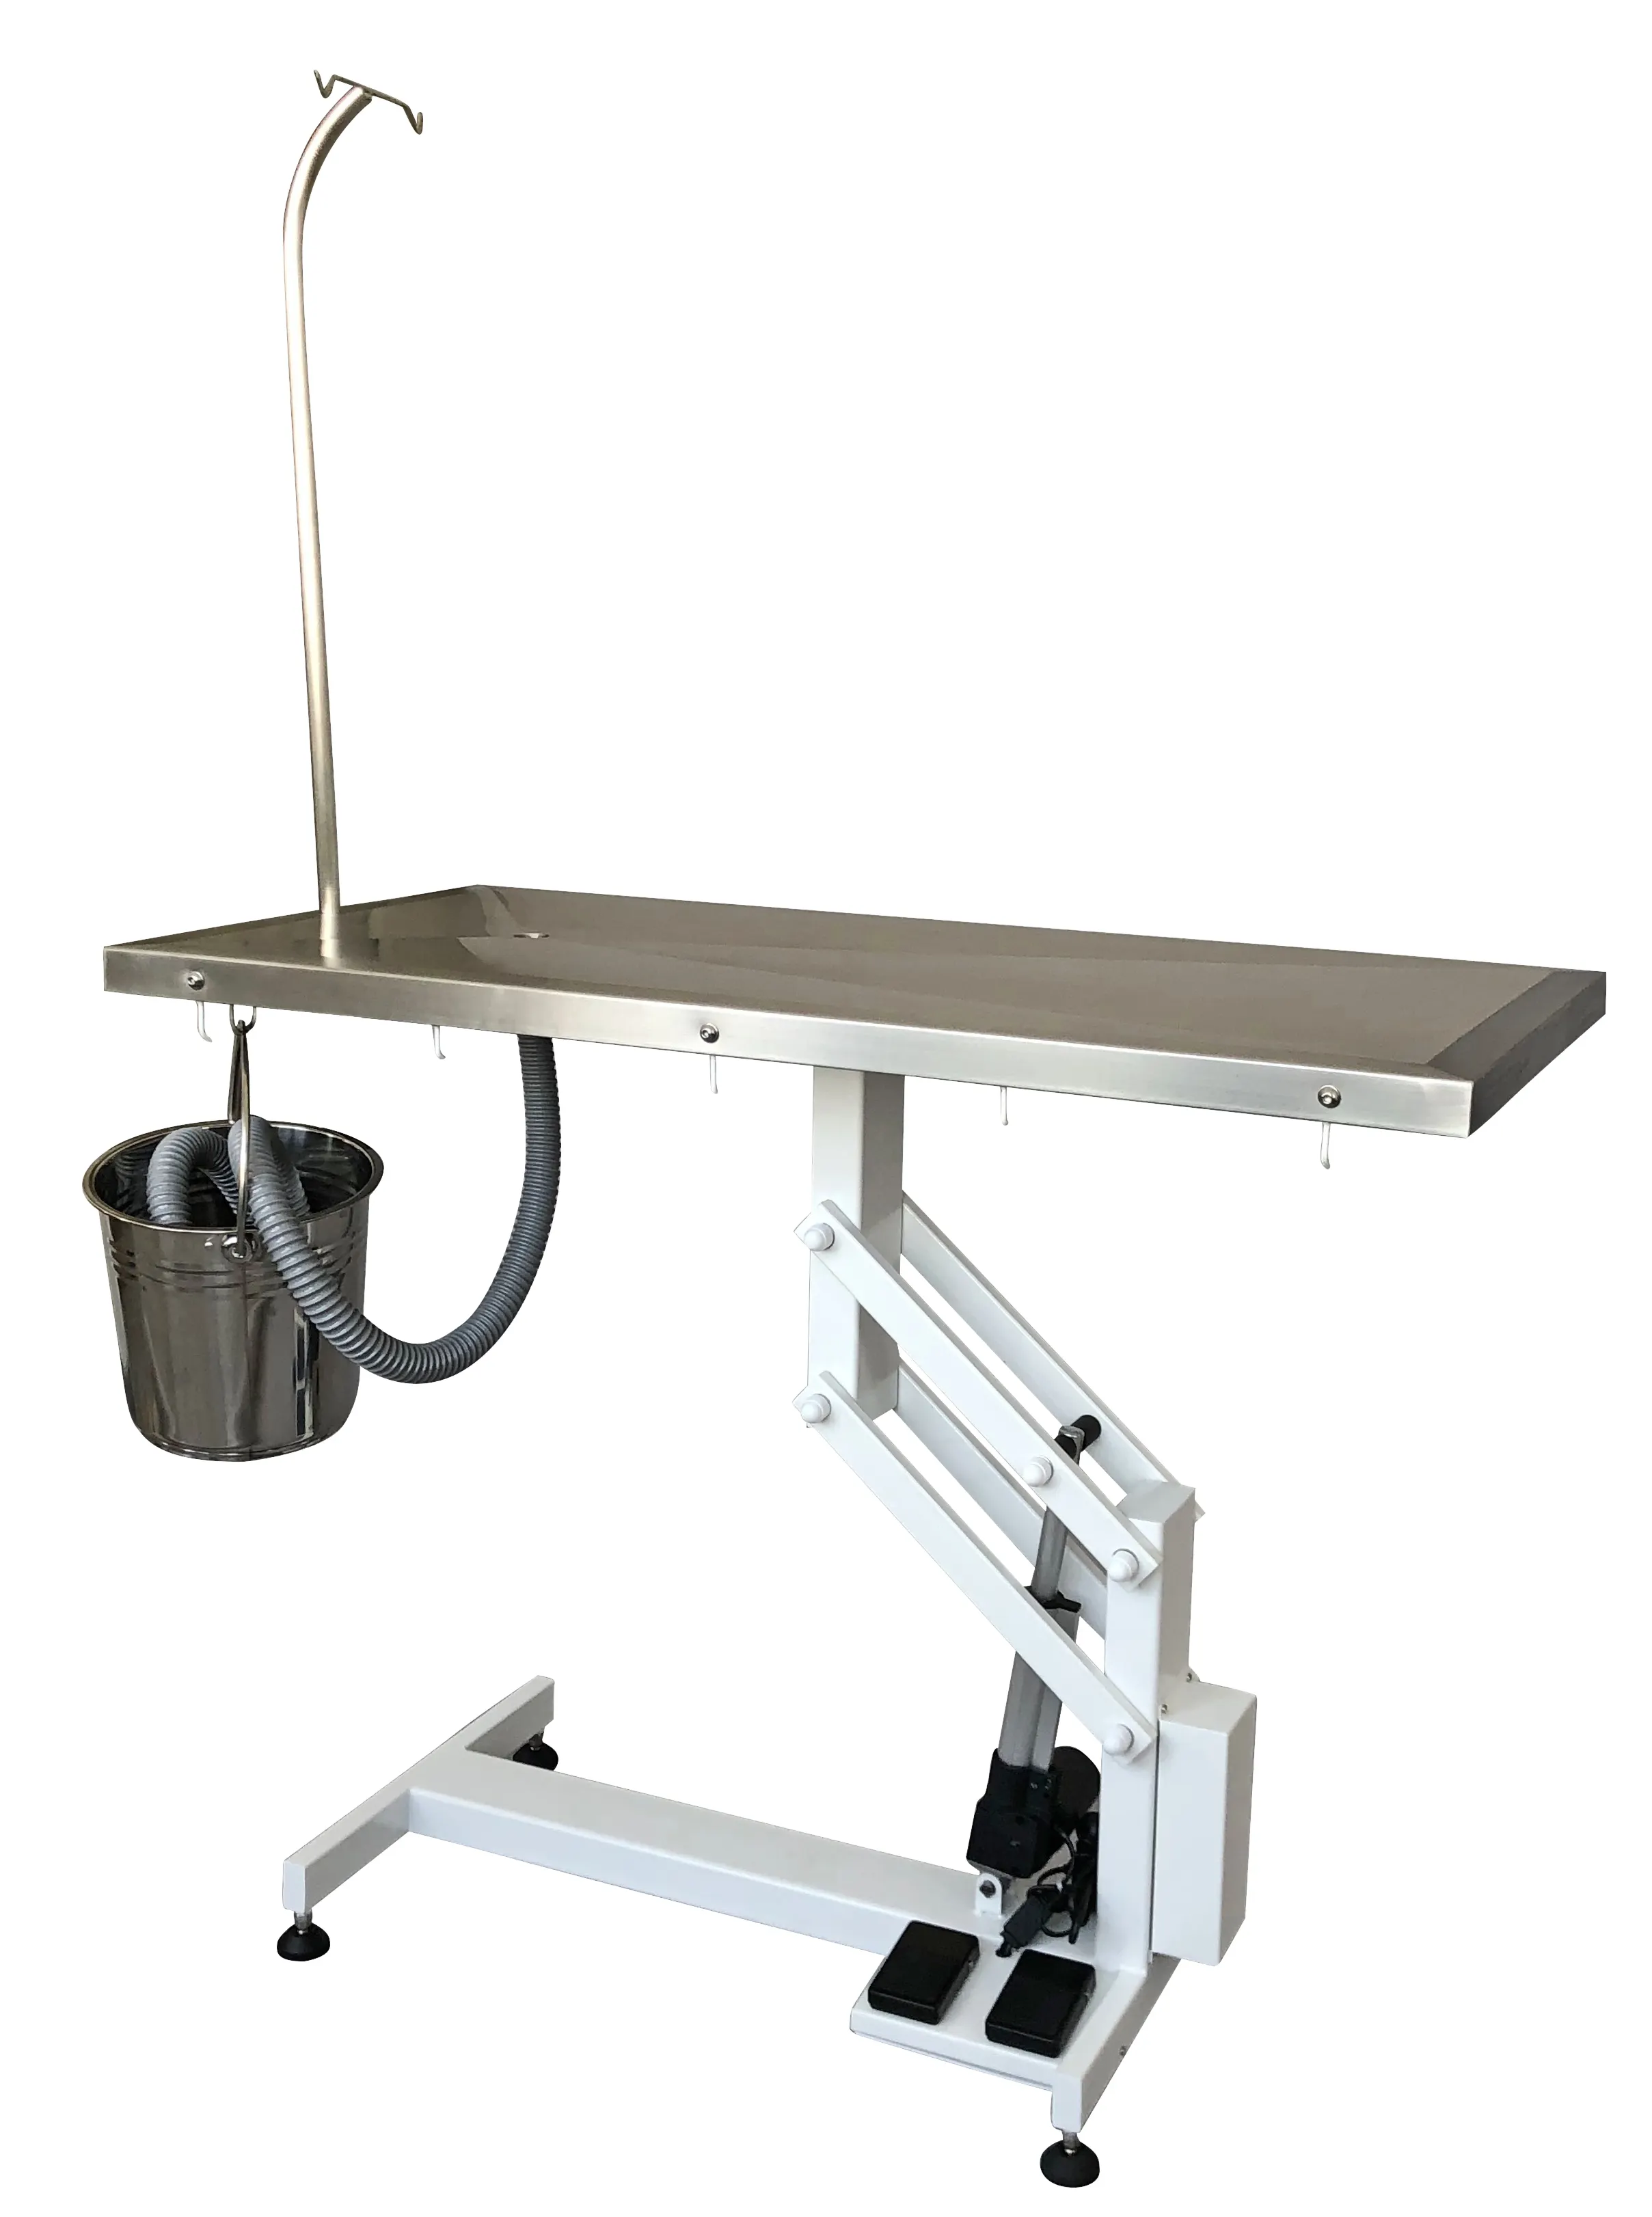 SUS304 S/S โต๊ะเสา IV คลินิกสัตวแพทย์ตารางปฏิบัติการคลาสสิกรูปตัว Z โต๊ะปฏิบัติการไฟฟ้าของโรงพยาบาลสัตว์เลี้ยง